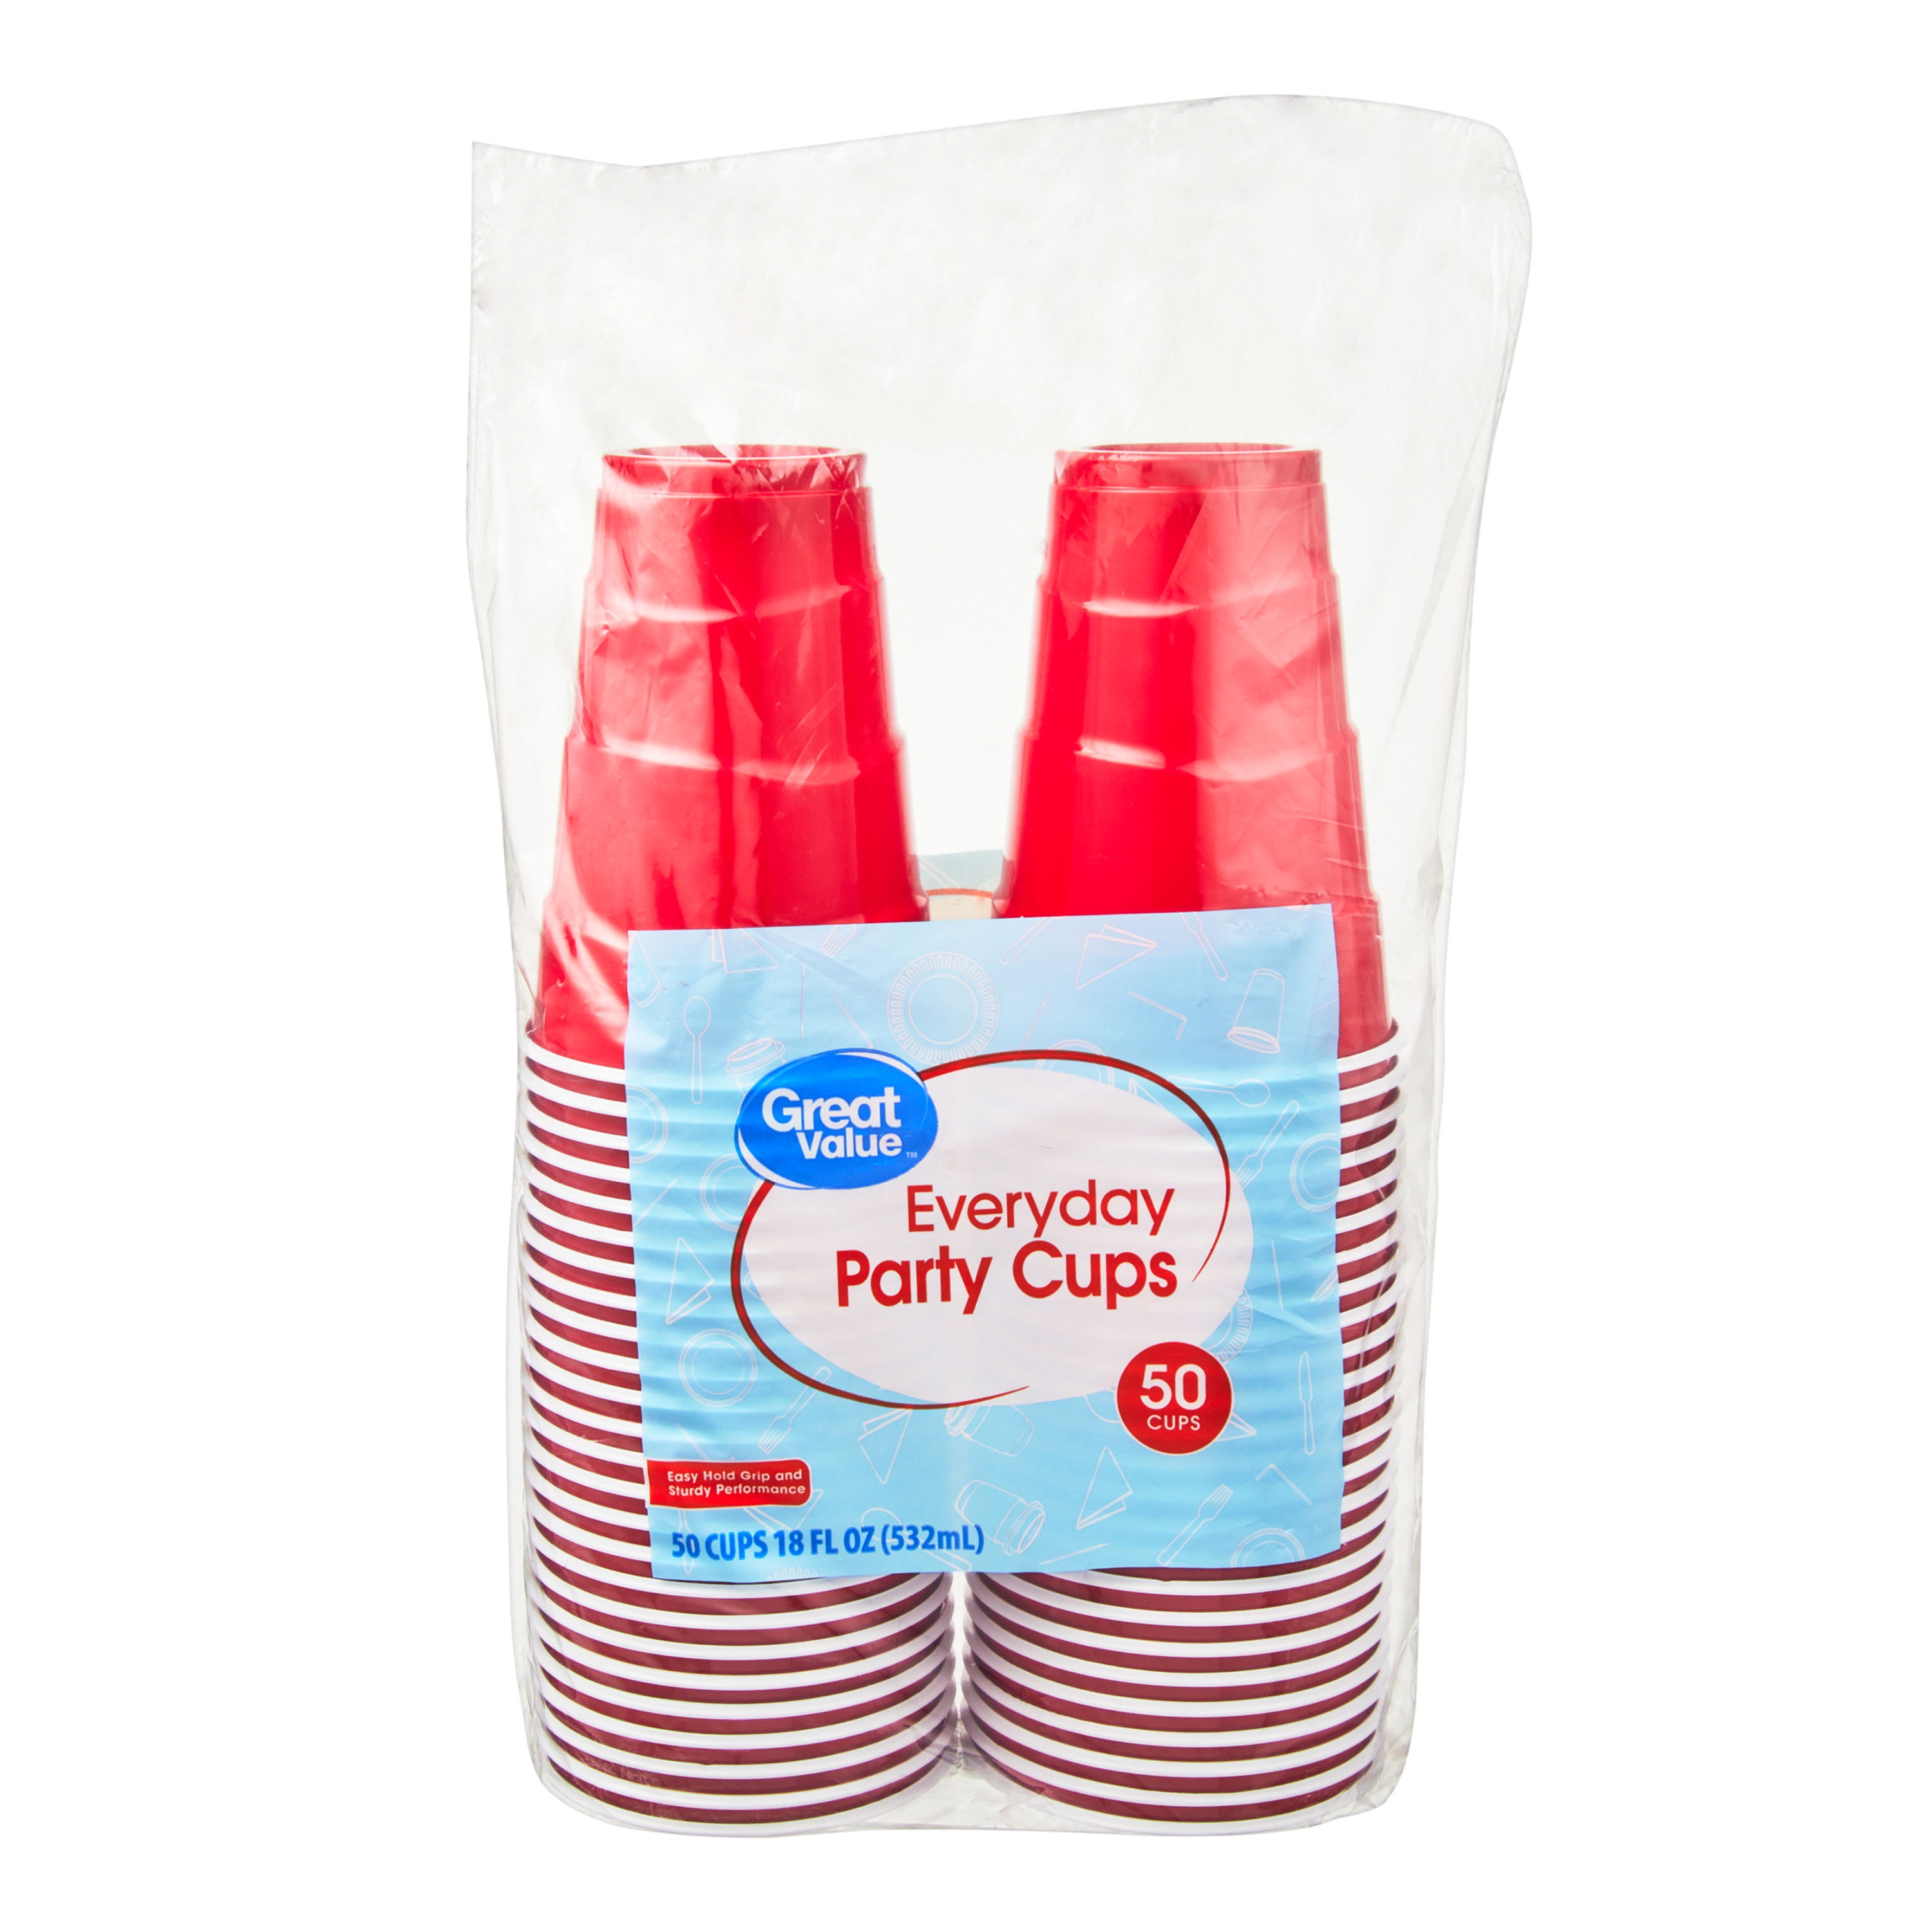 Amscan Kiwi Big Party Pack - 18 Oz. Plastic Cups, Qty 50 (436810.53)